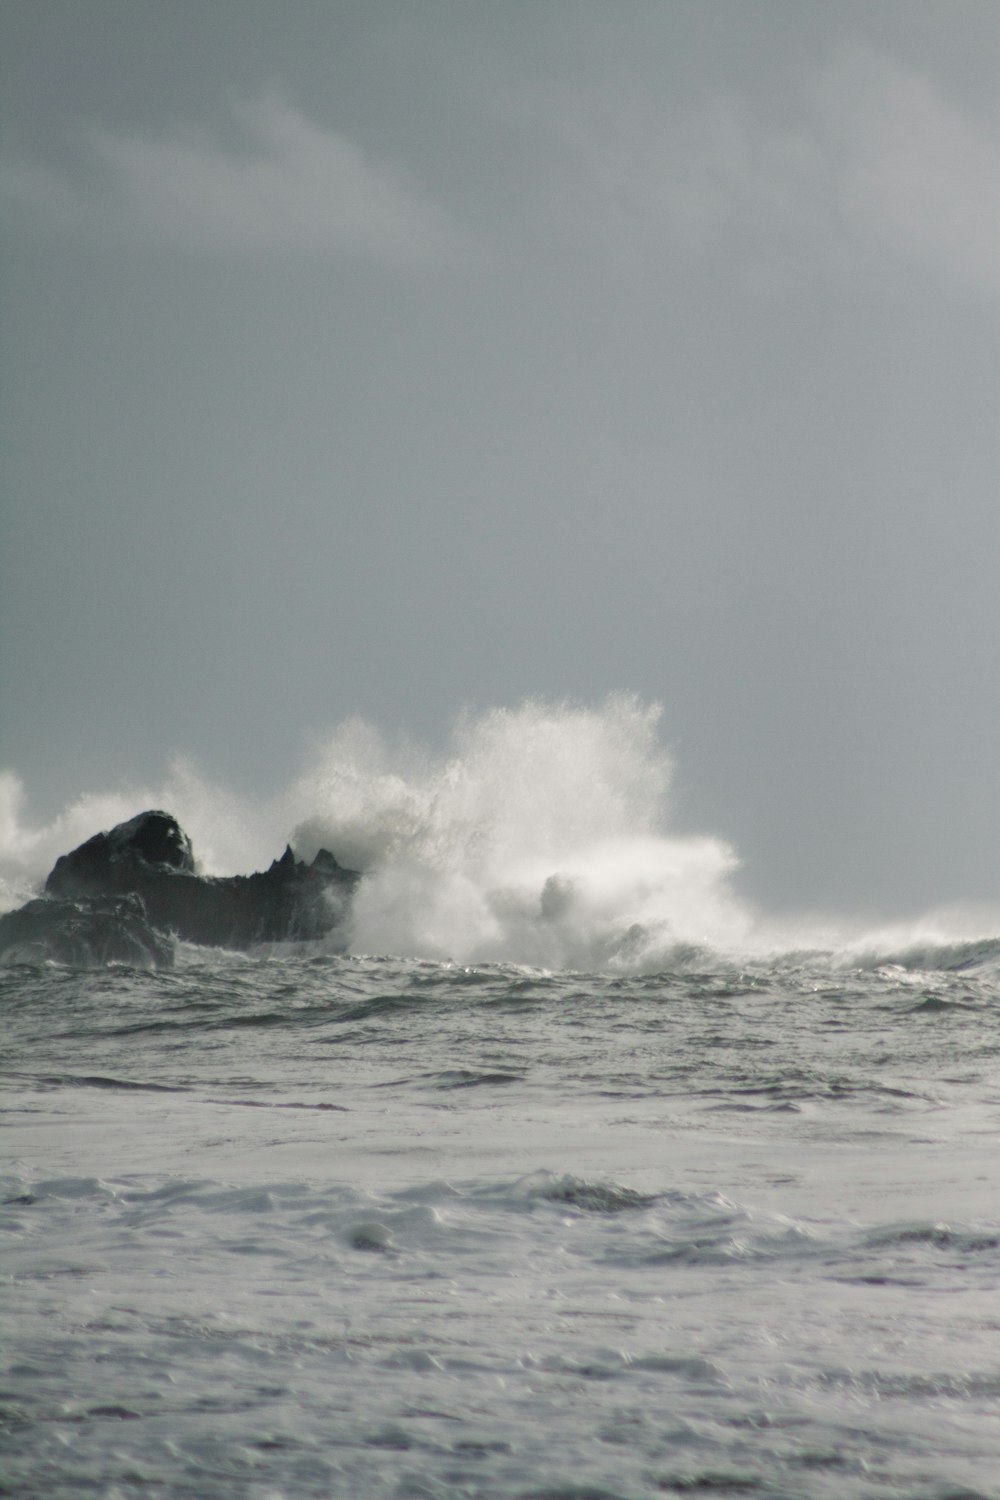 ocean waves hitting rock formation during daytime